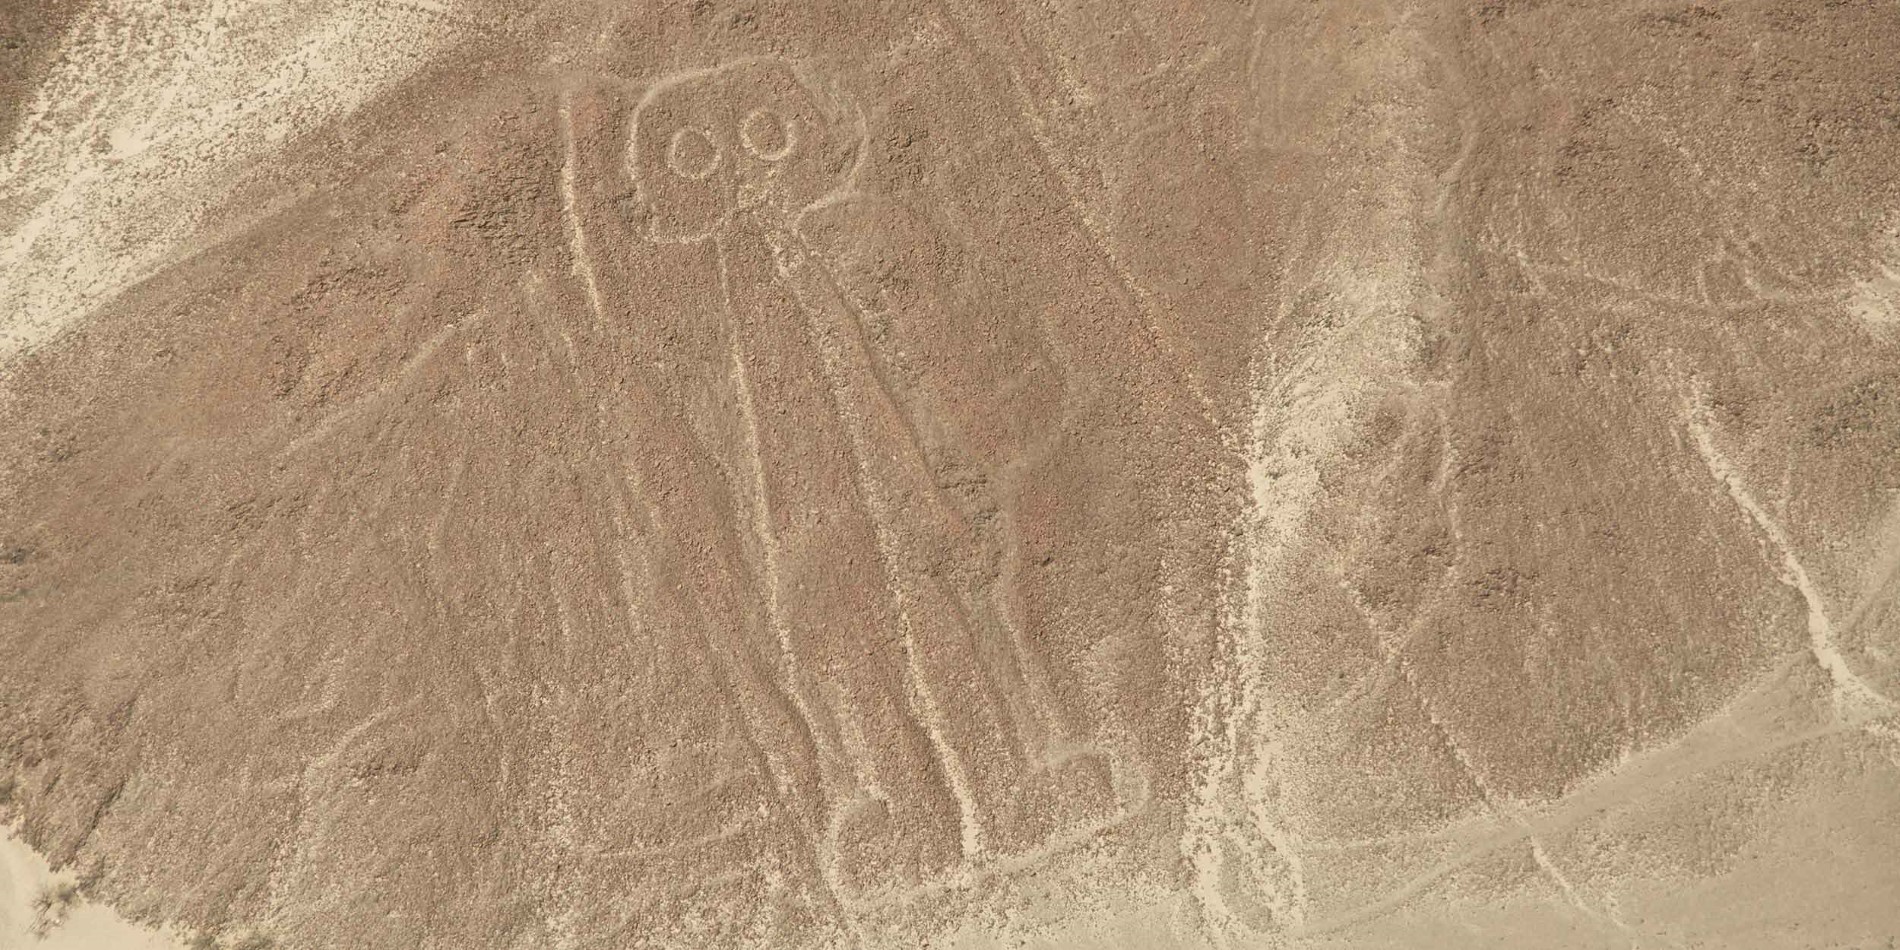 Owlman geoglyph, Nazca Lines, Peru